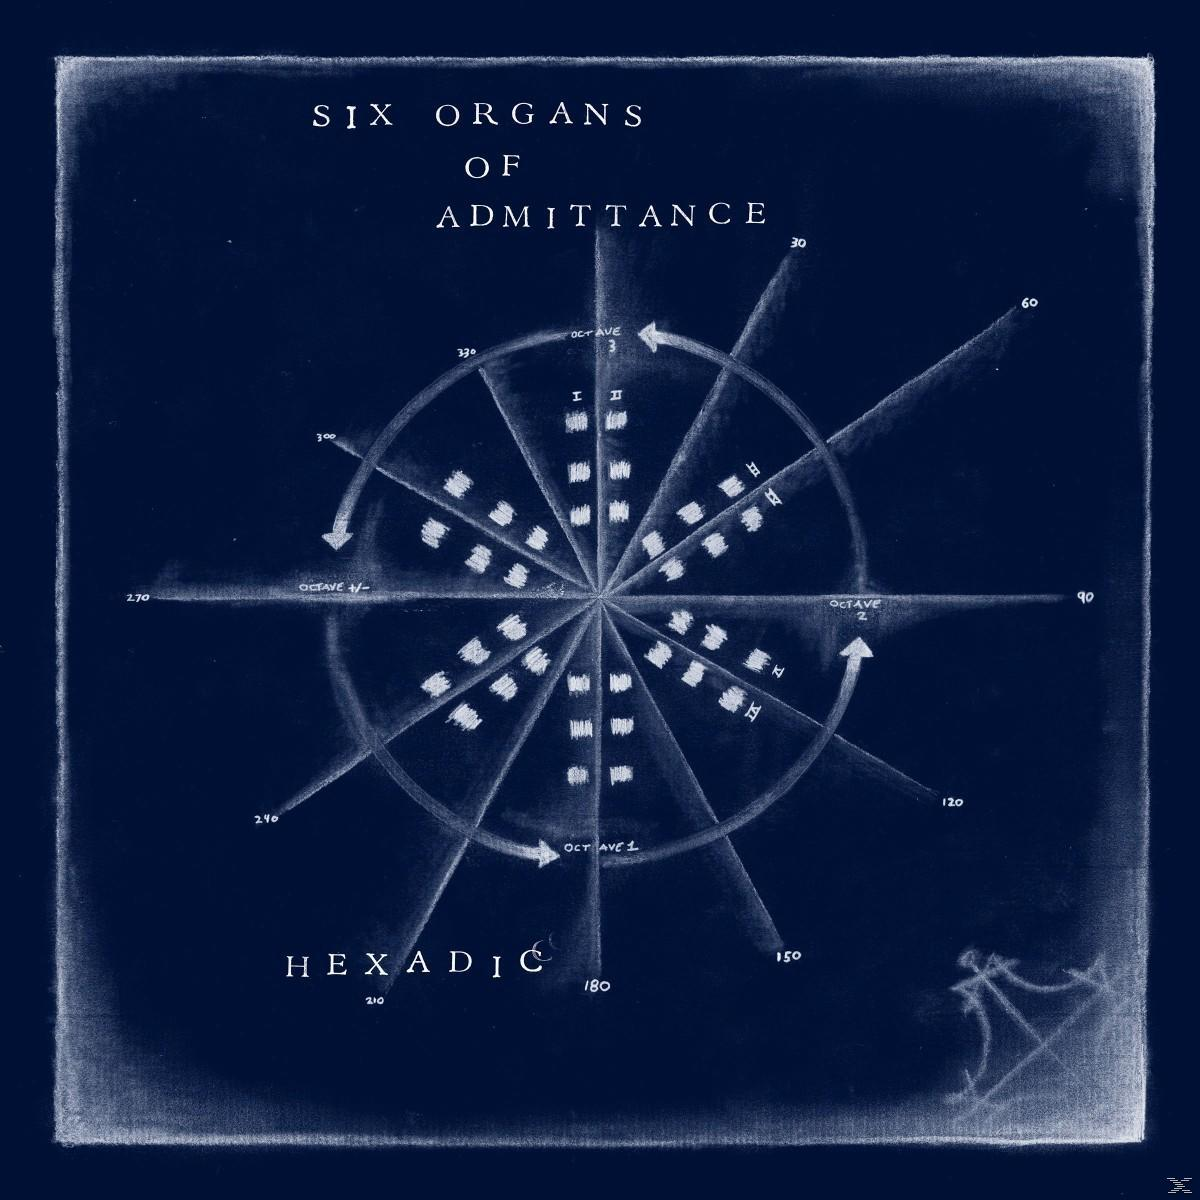 Organs - Six (CD) Hexadic Admittance Of -